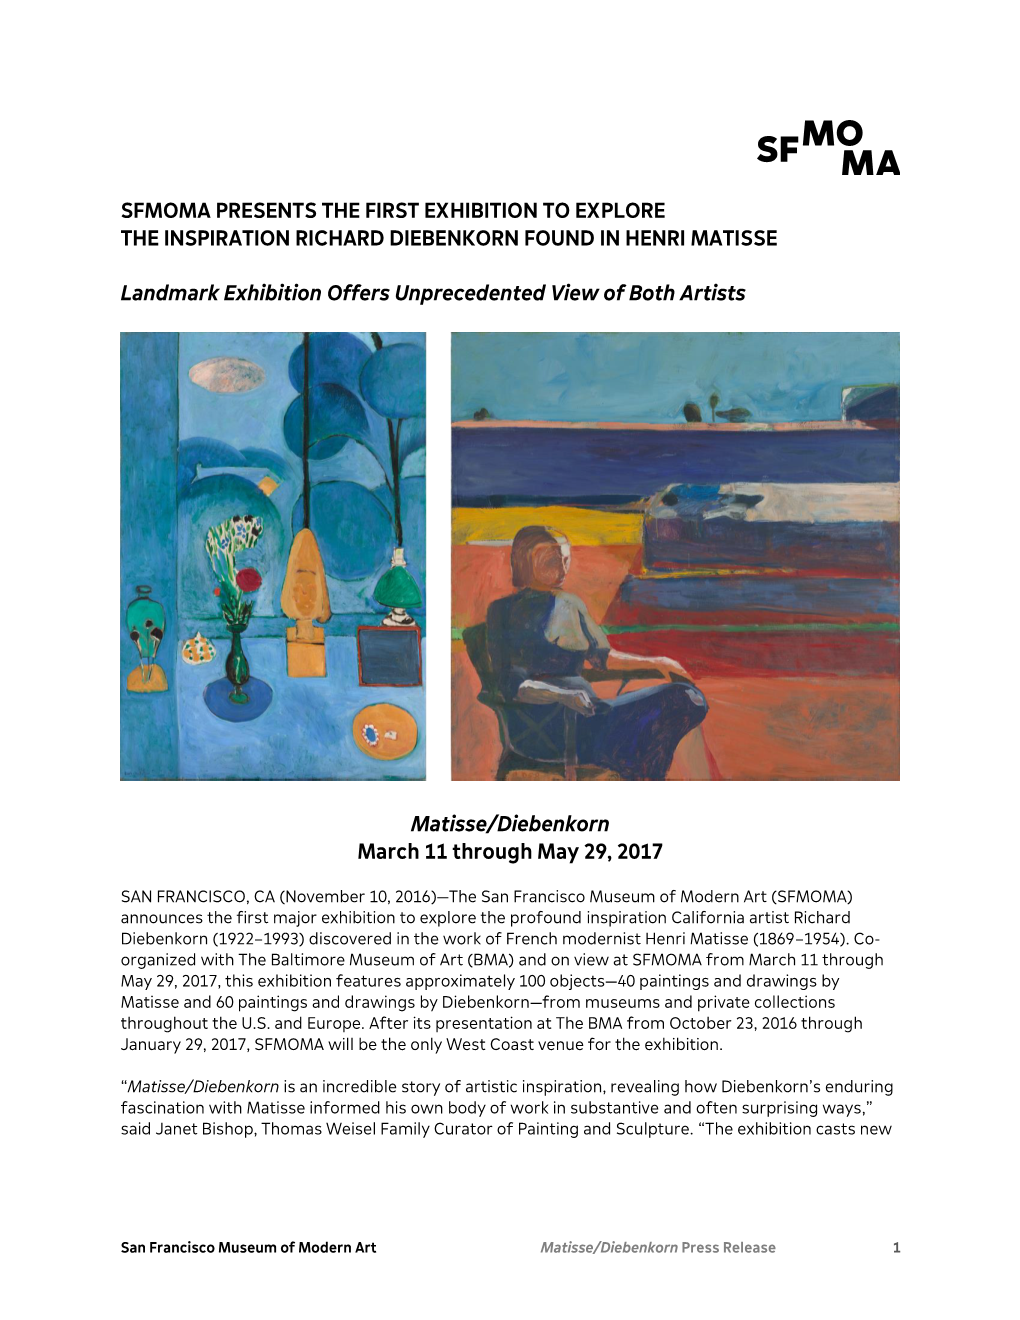 Sfmoma Presents the First Exhibition to Explore the Inspiration Richard Diebenkorn Found in Henri Matisse